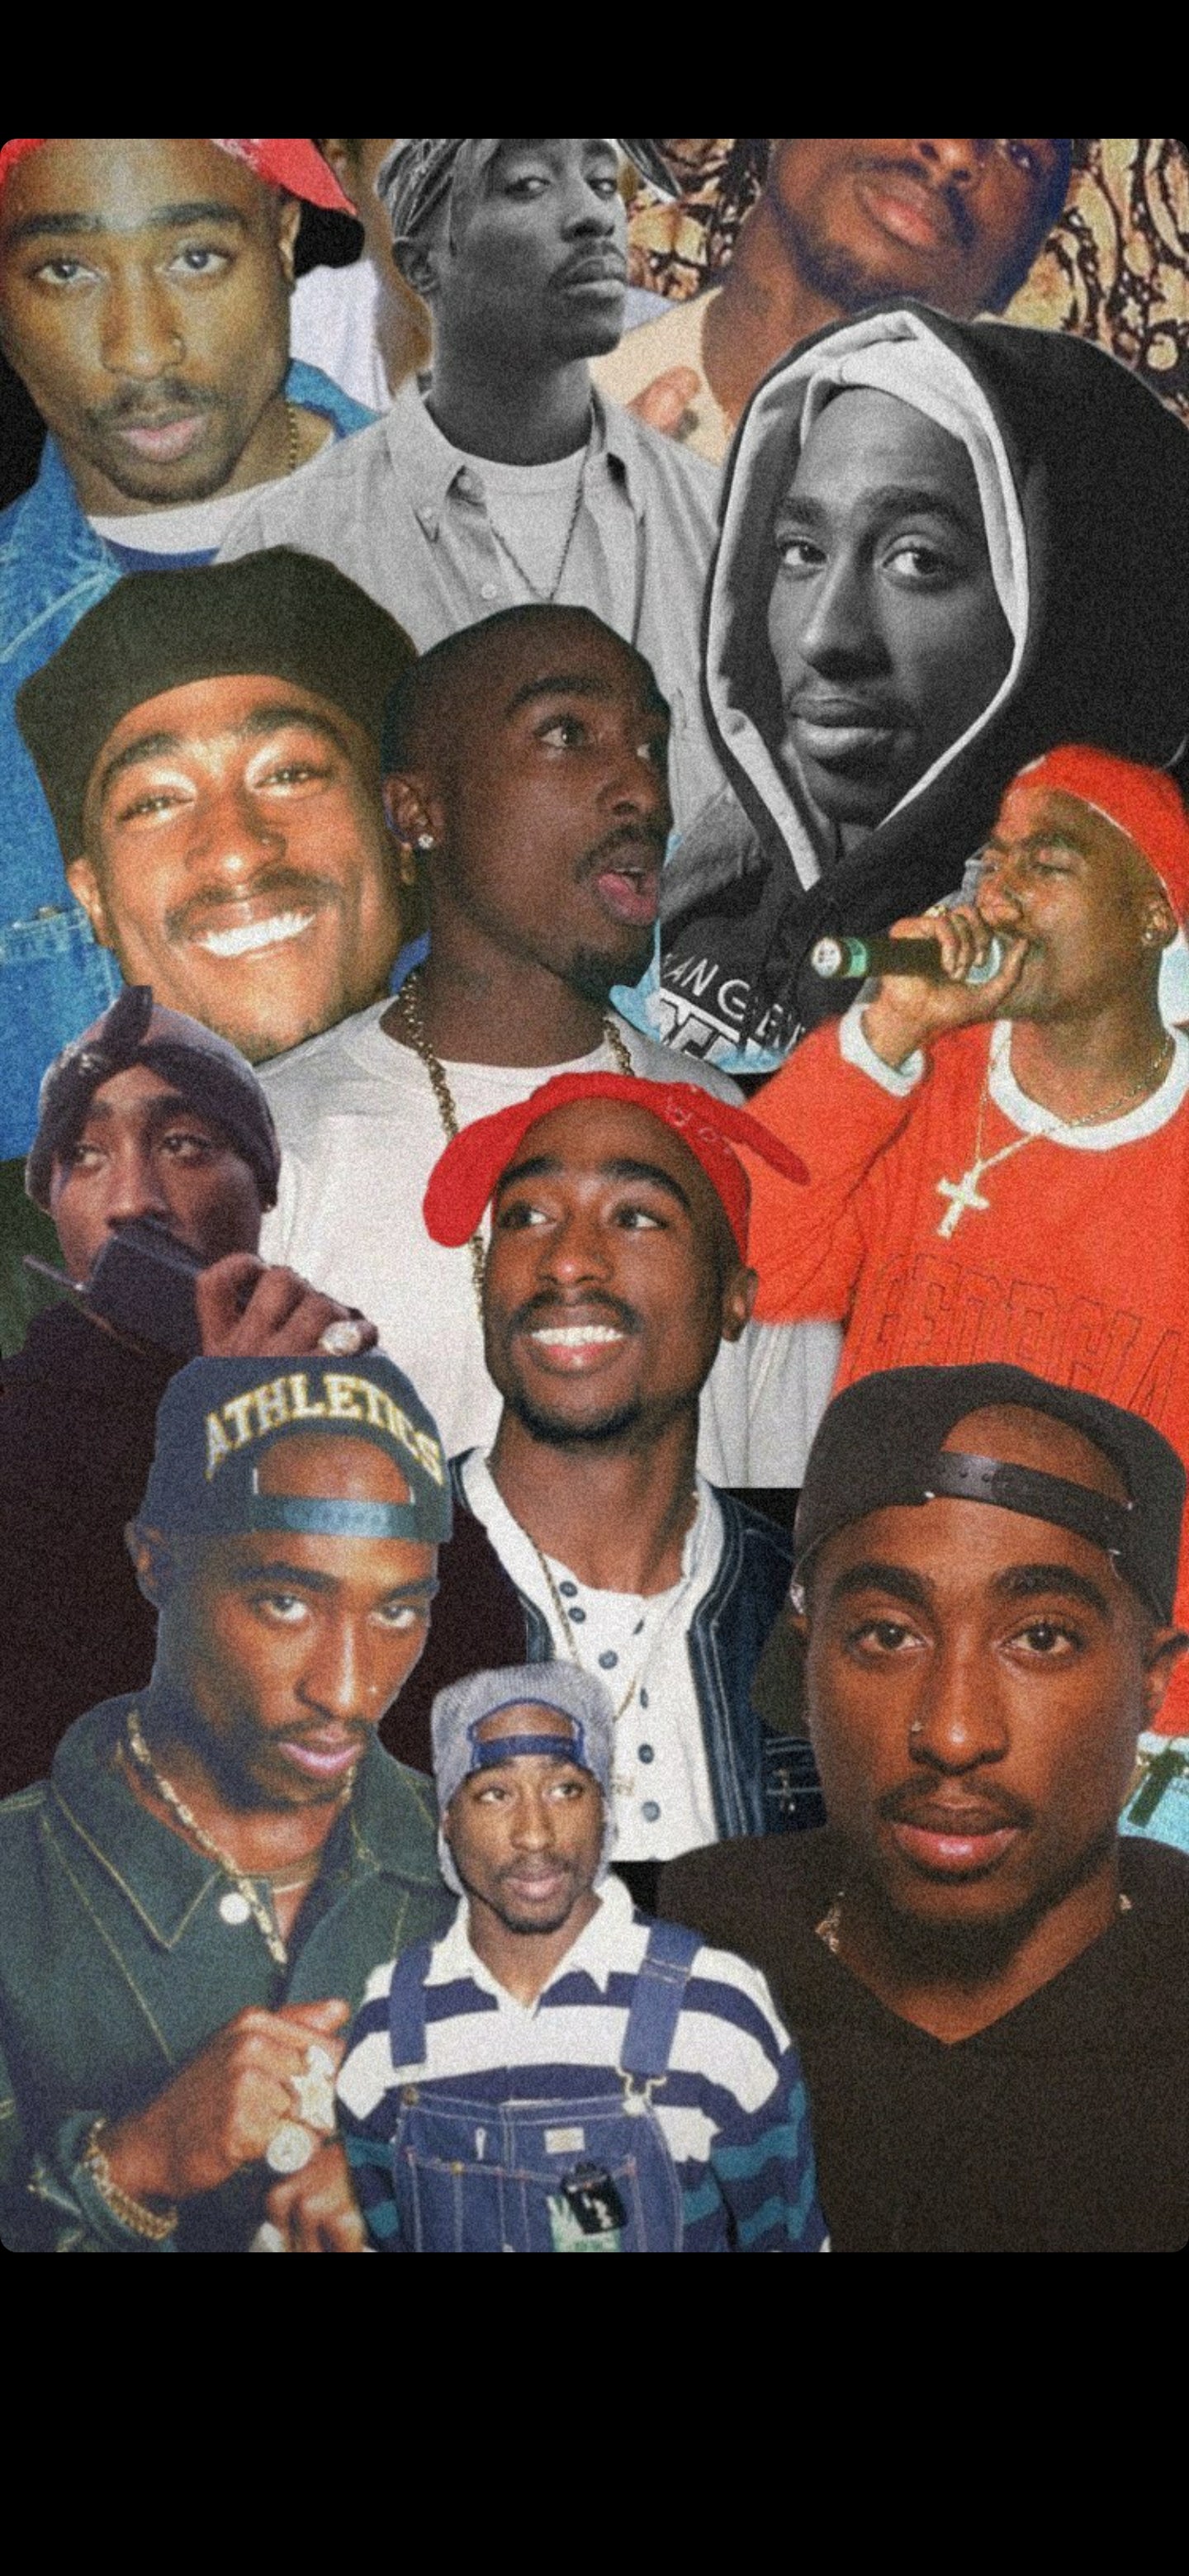 Tupac wallpaper I made hope y'all enjoy